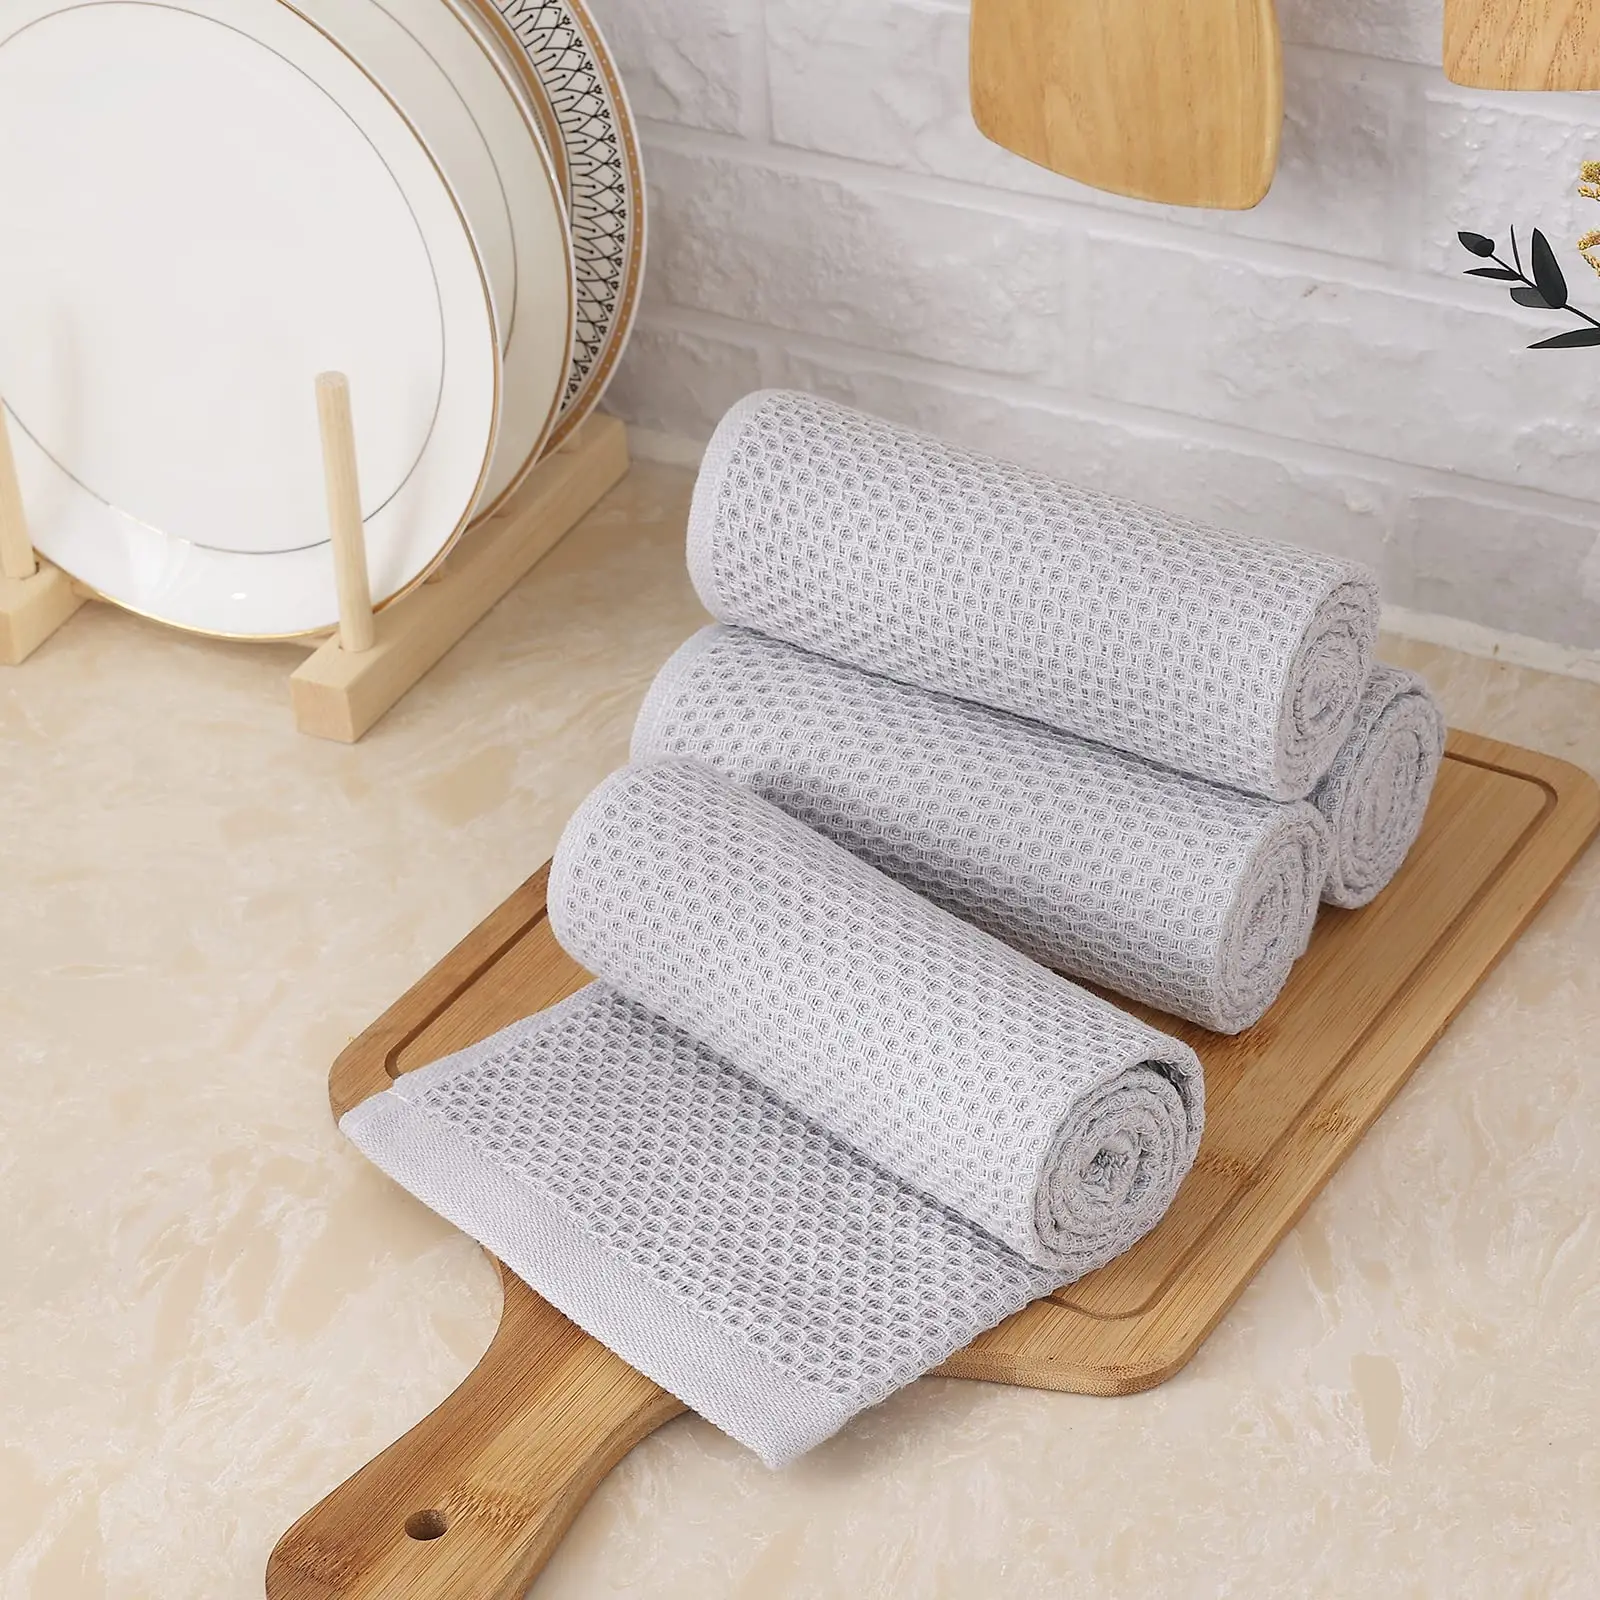 https://ae01.alicdn.com/kf/S58cbe96259d14bf5887cdb338c8baa089/Homaxy-100-Cotton-Dishcloth-Waffle-Weave-Hand-Towel-Soft-Absorbent-Kitchen-Dish-Cleaning-Cloth-Quick-Drying.jpg